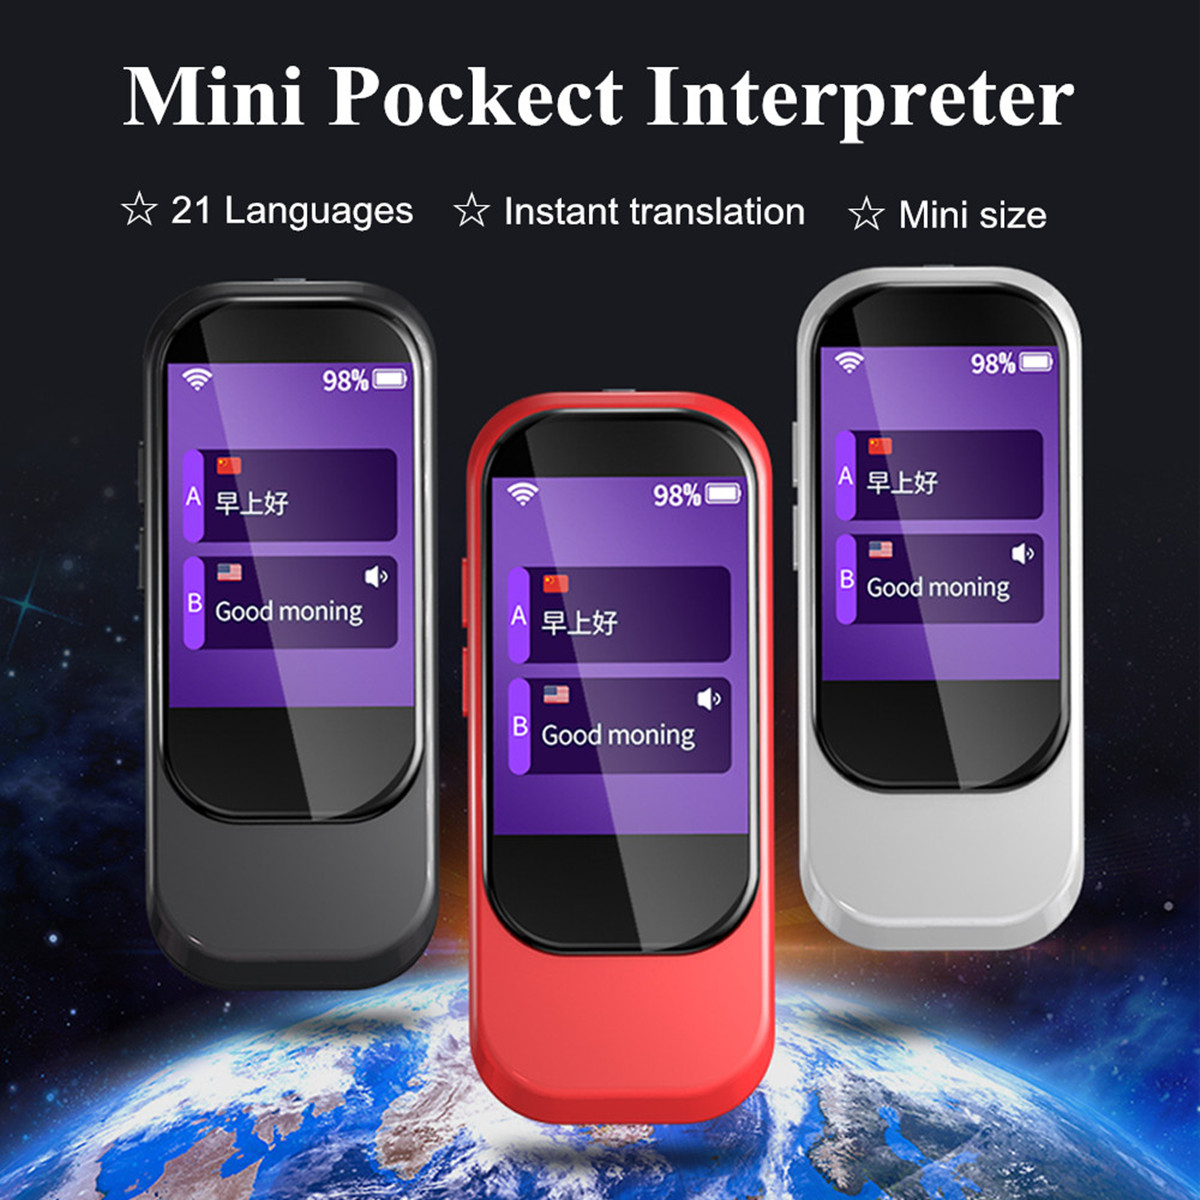 N9-21-Languages-Translator-Mini-Pocket-Interpreter-Instant-Voice-Translation-Device-Android-IOS-1359065-1